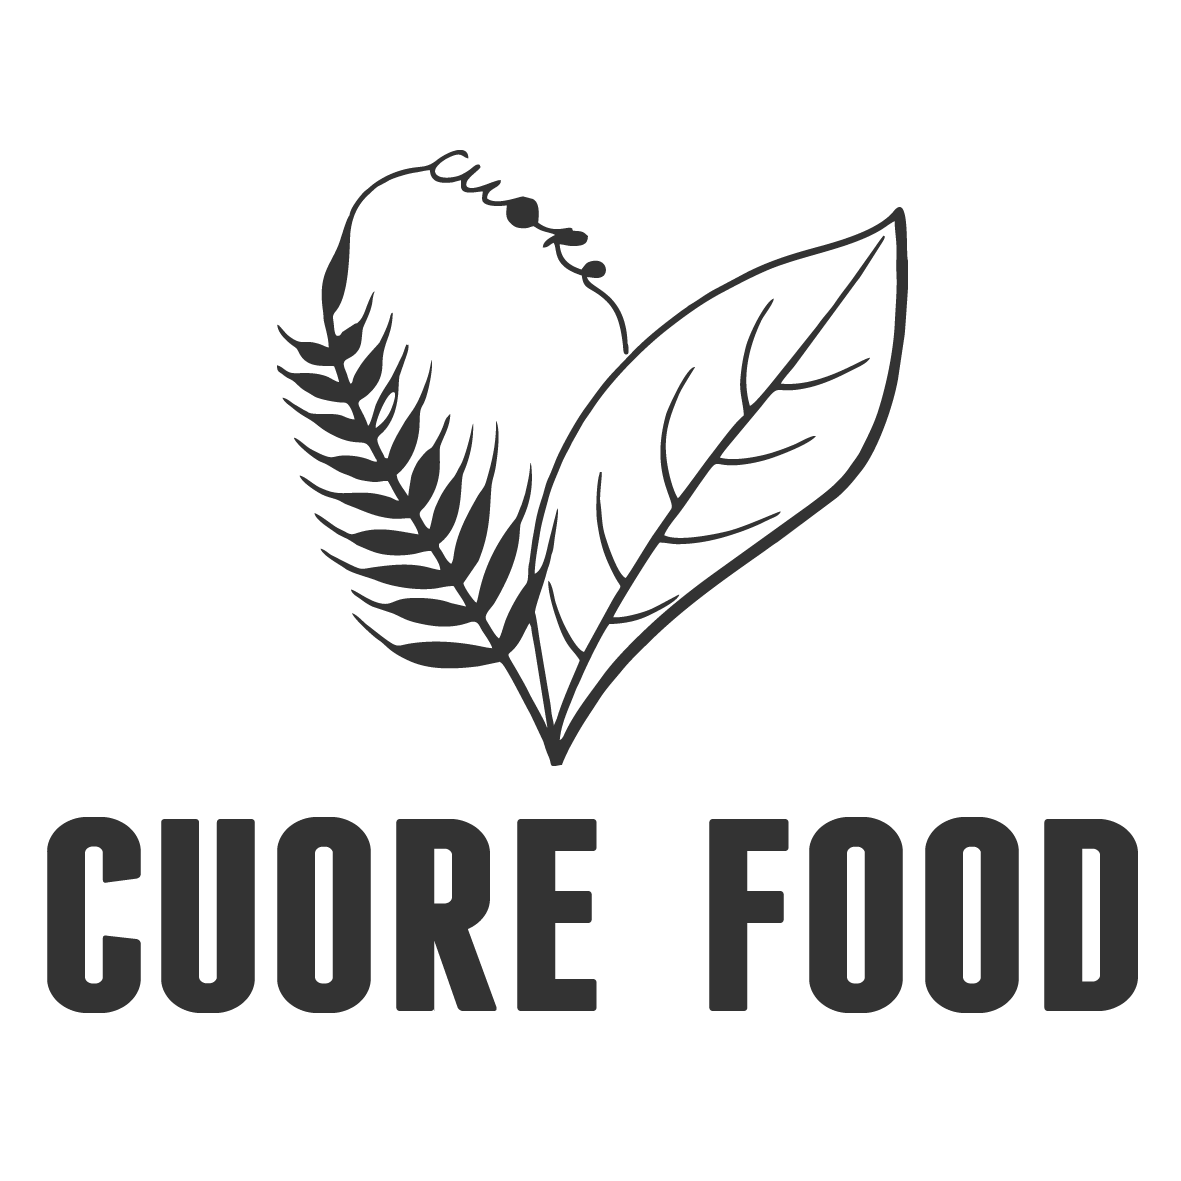 Cuore Food